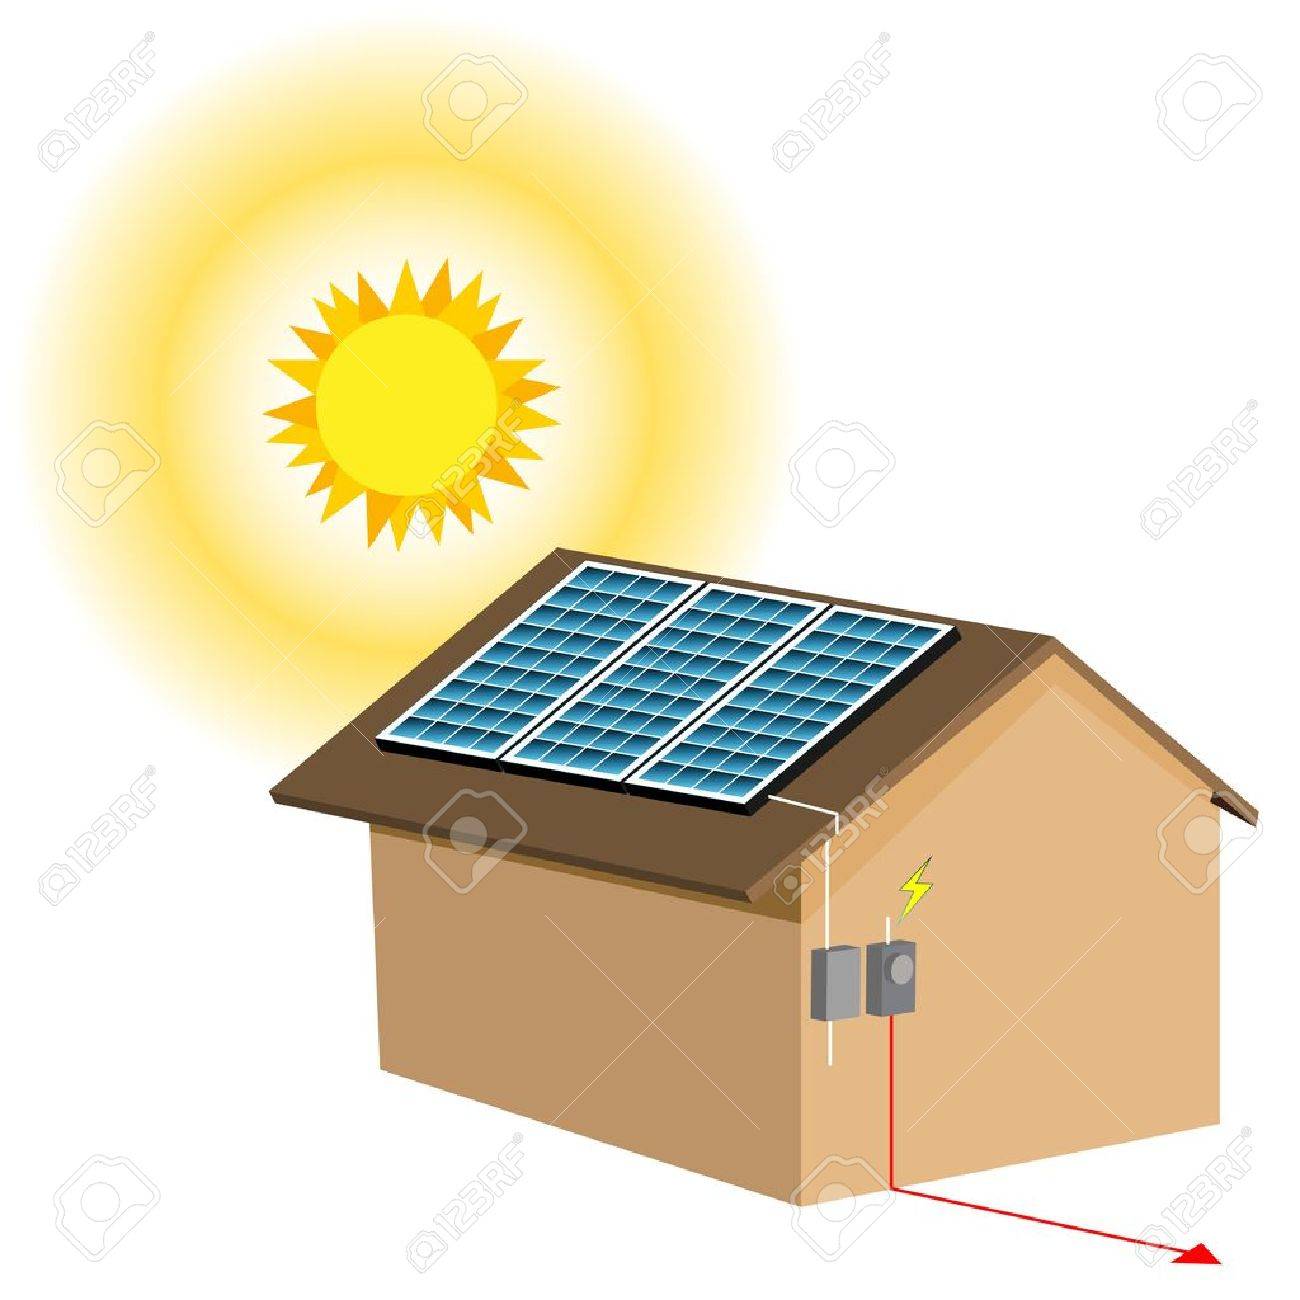 Solar Energy Panels Clipart.